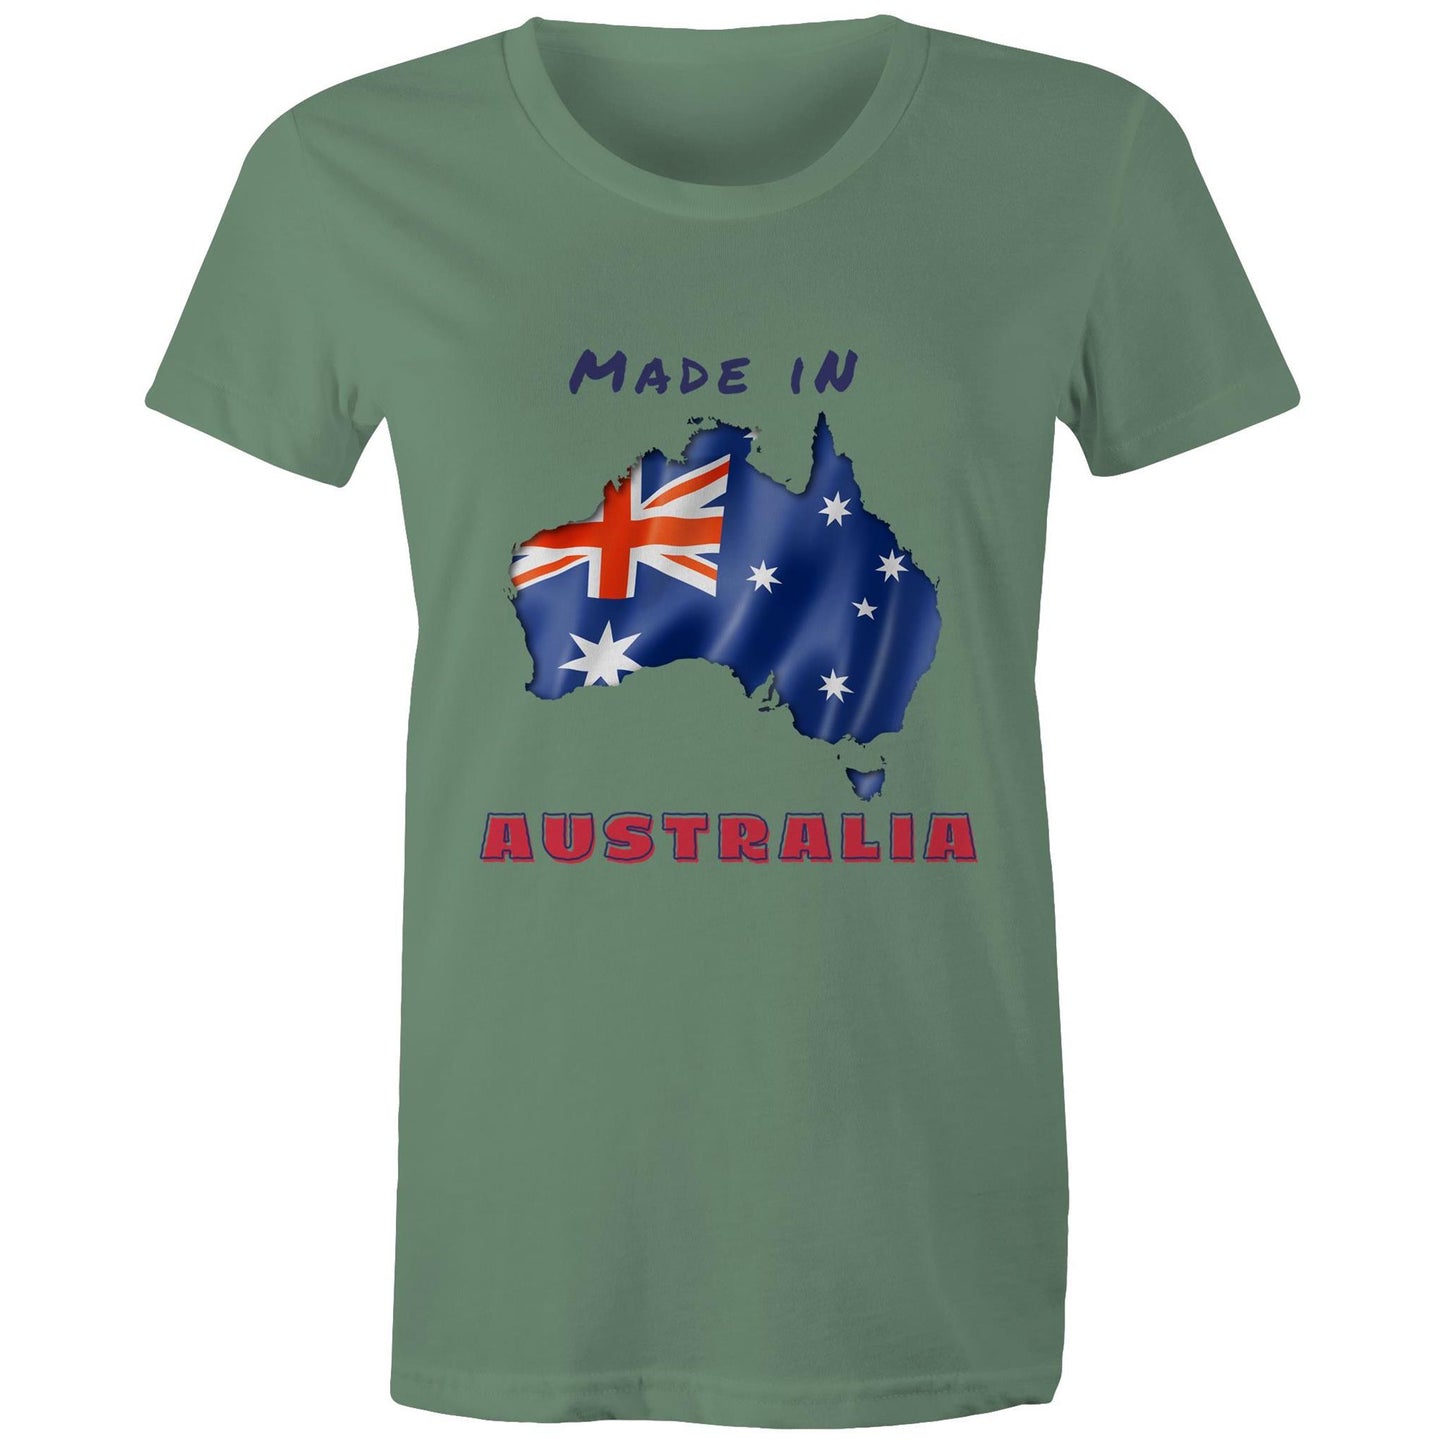 Made In Australia - Women's Maple Tee